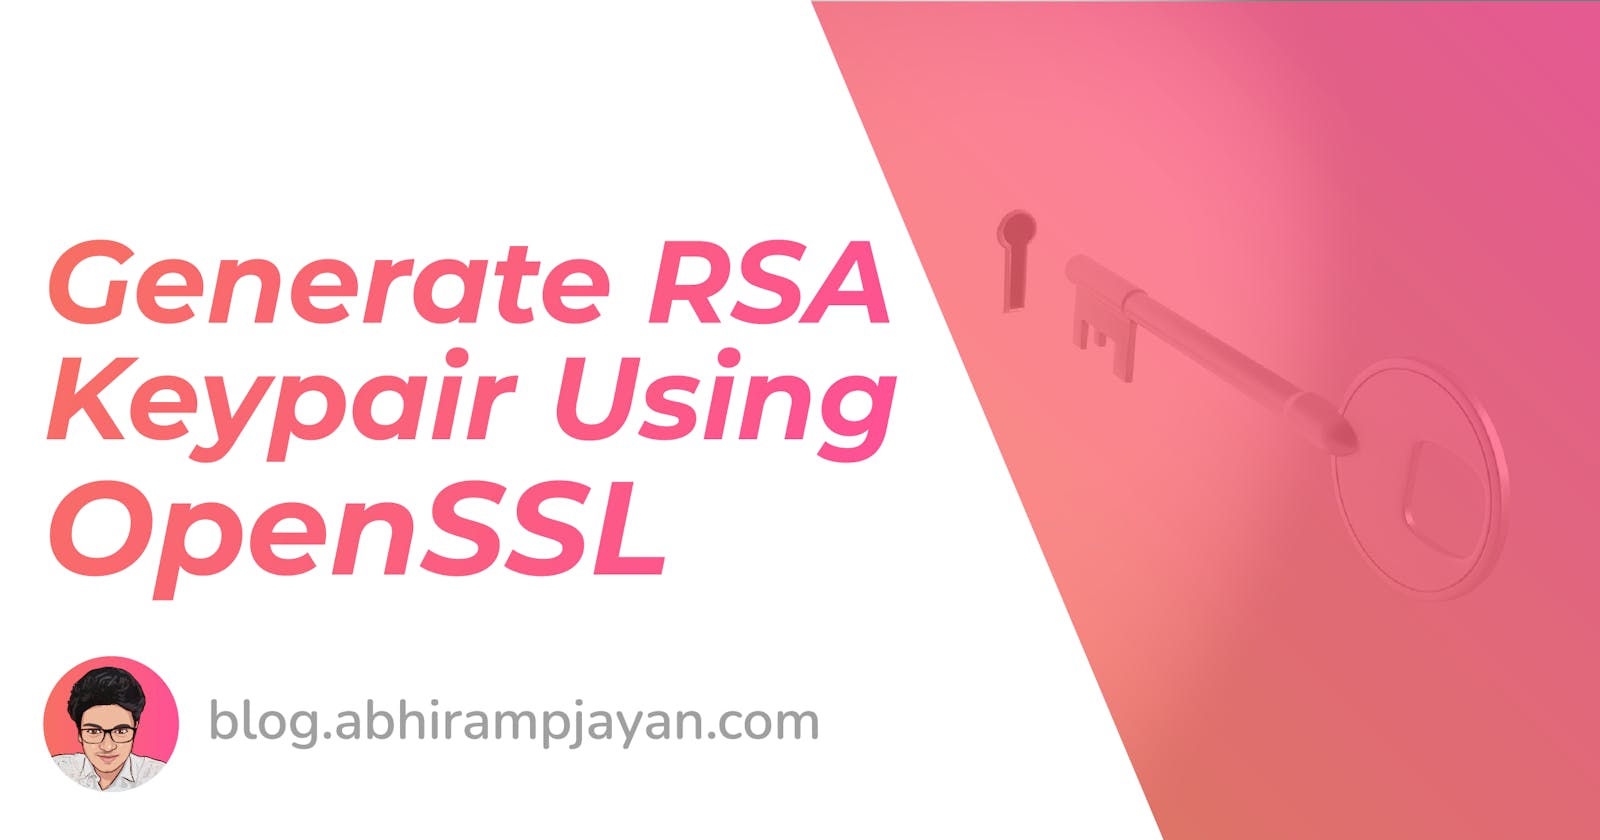 Generate RSA Keypair Using OpenSSL